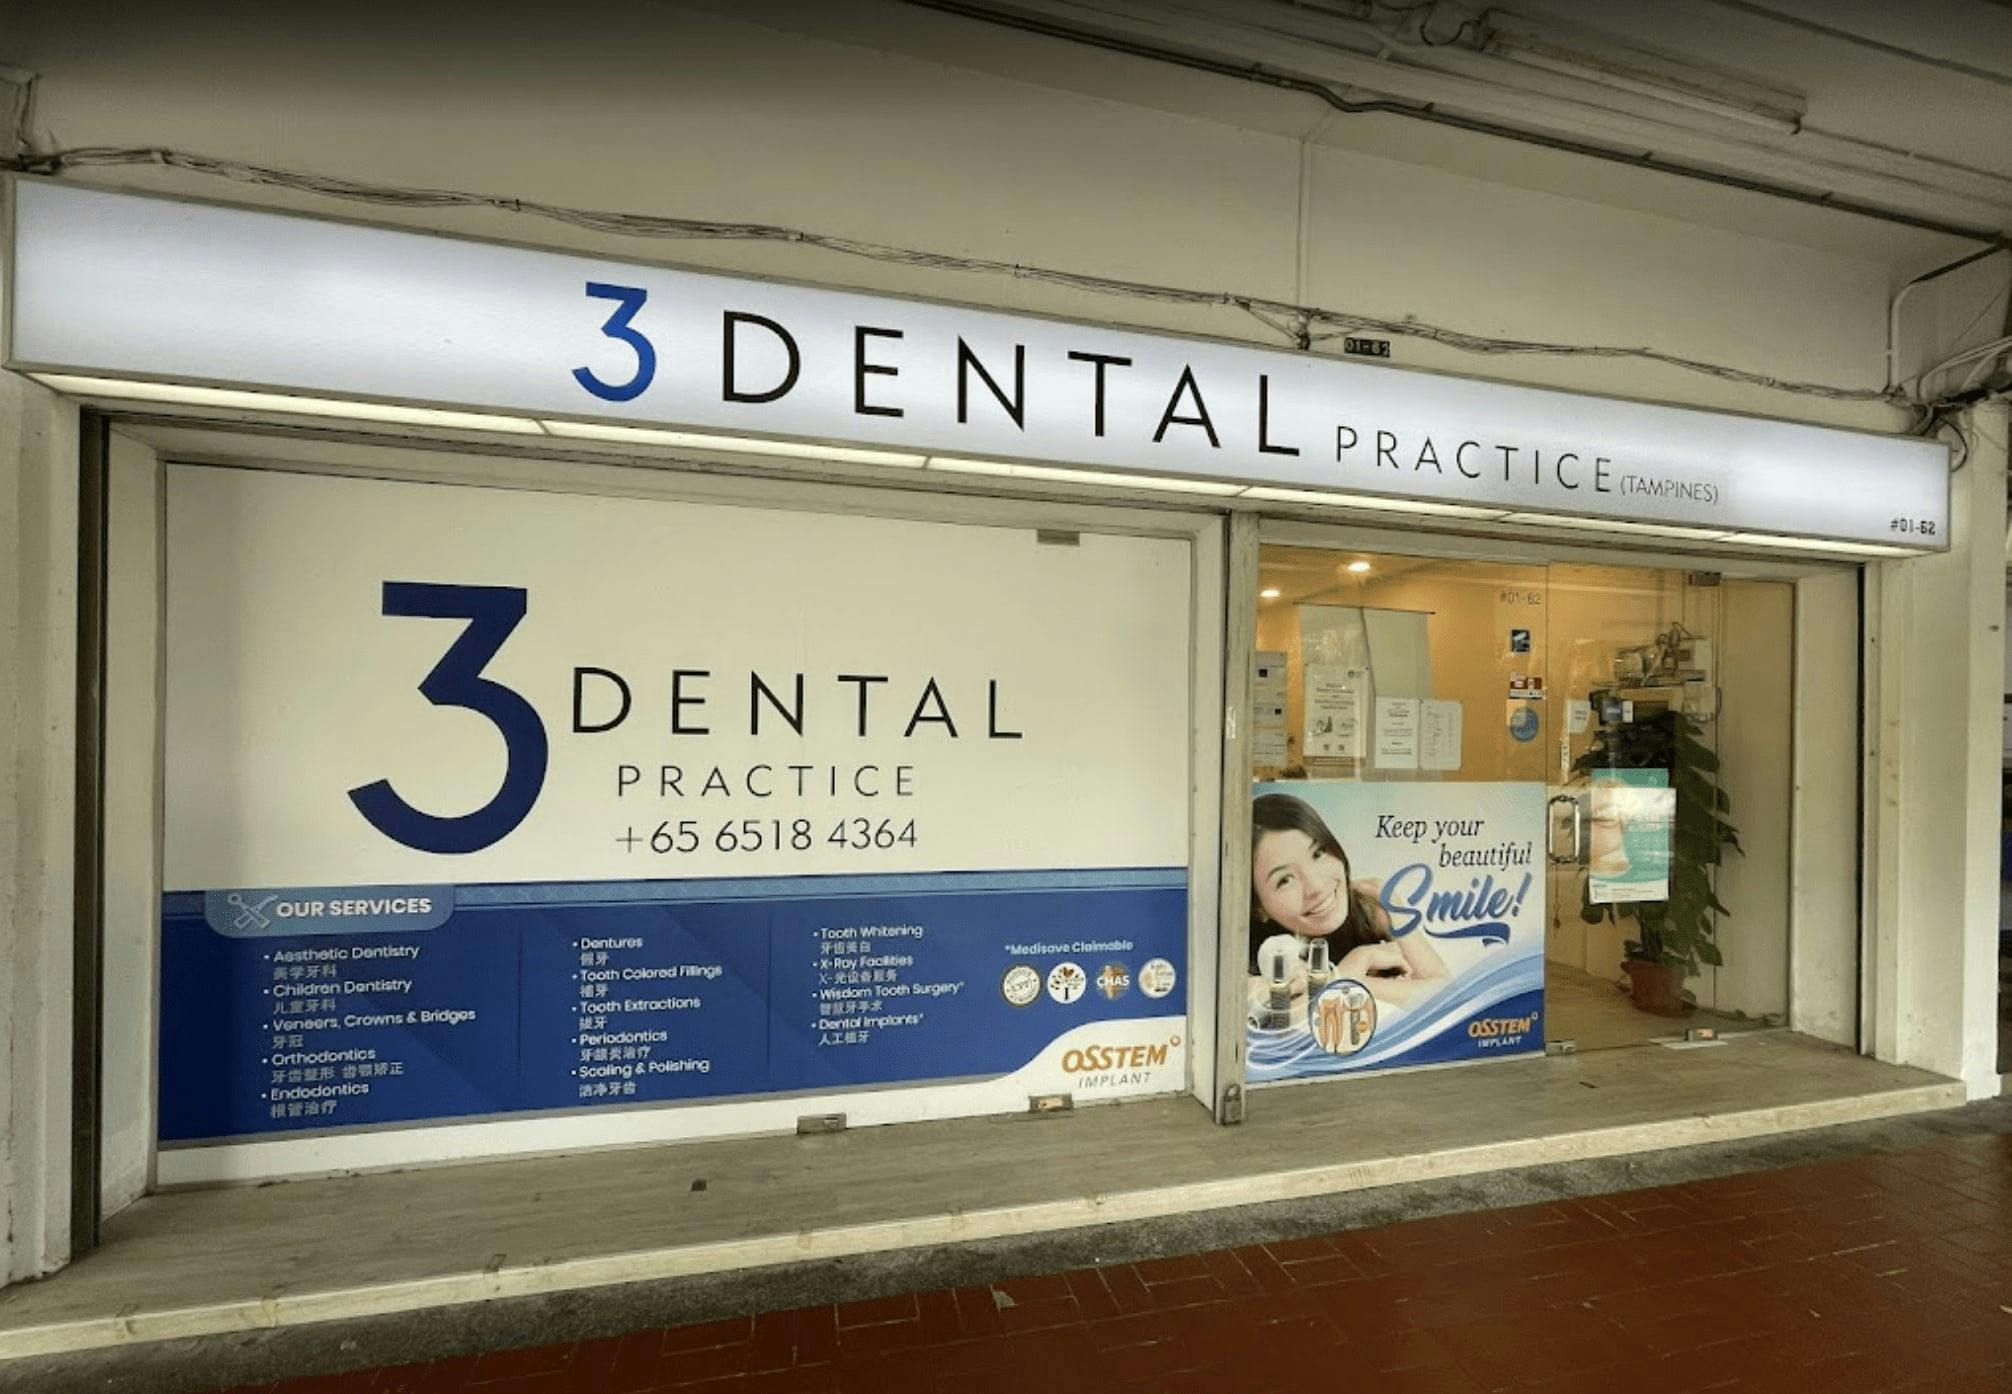 3 Dental Practice (Tampines)